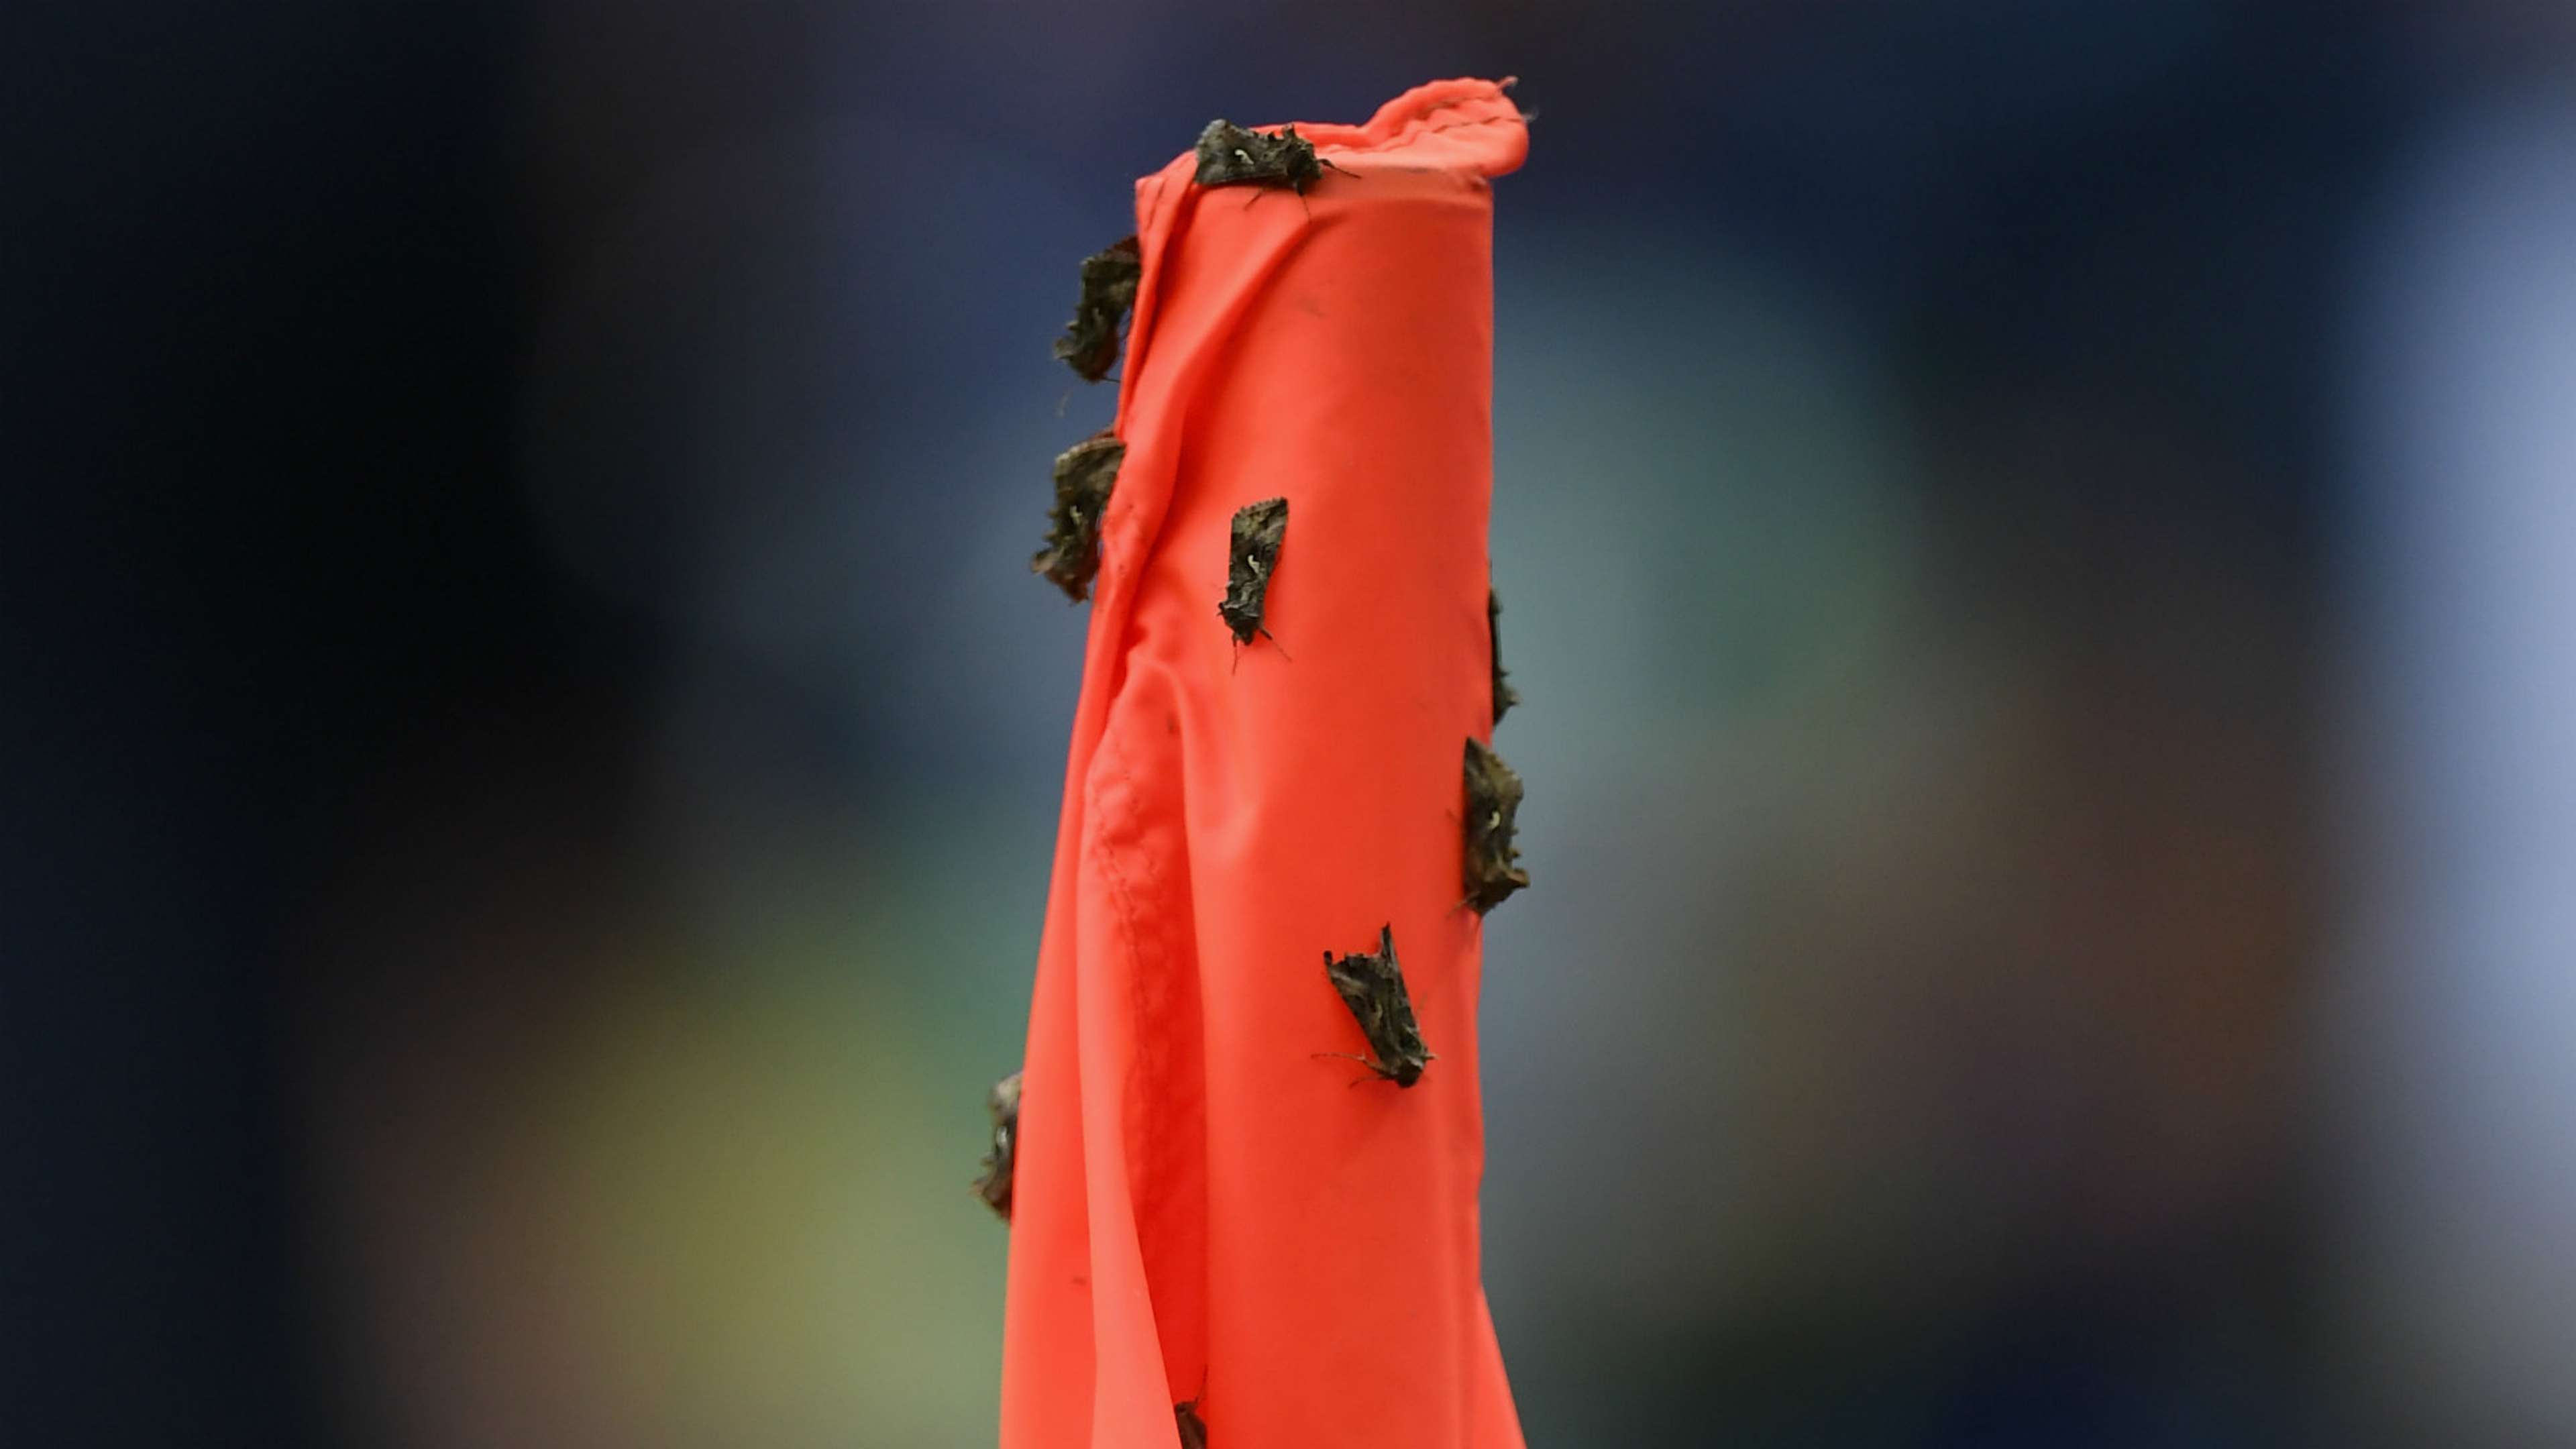 Euro 2016 Moths